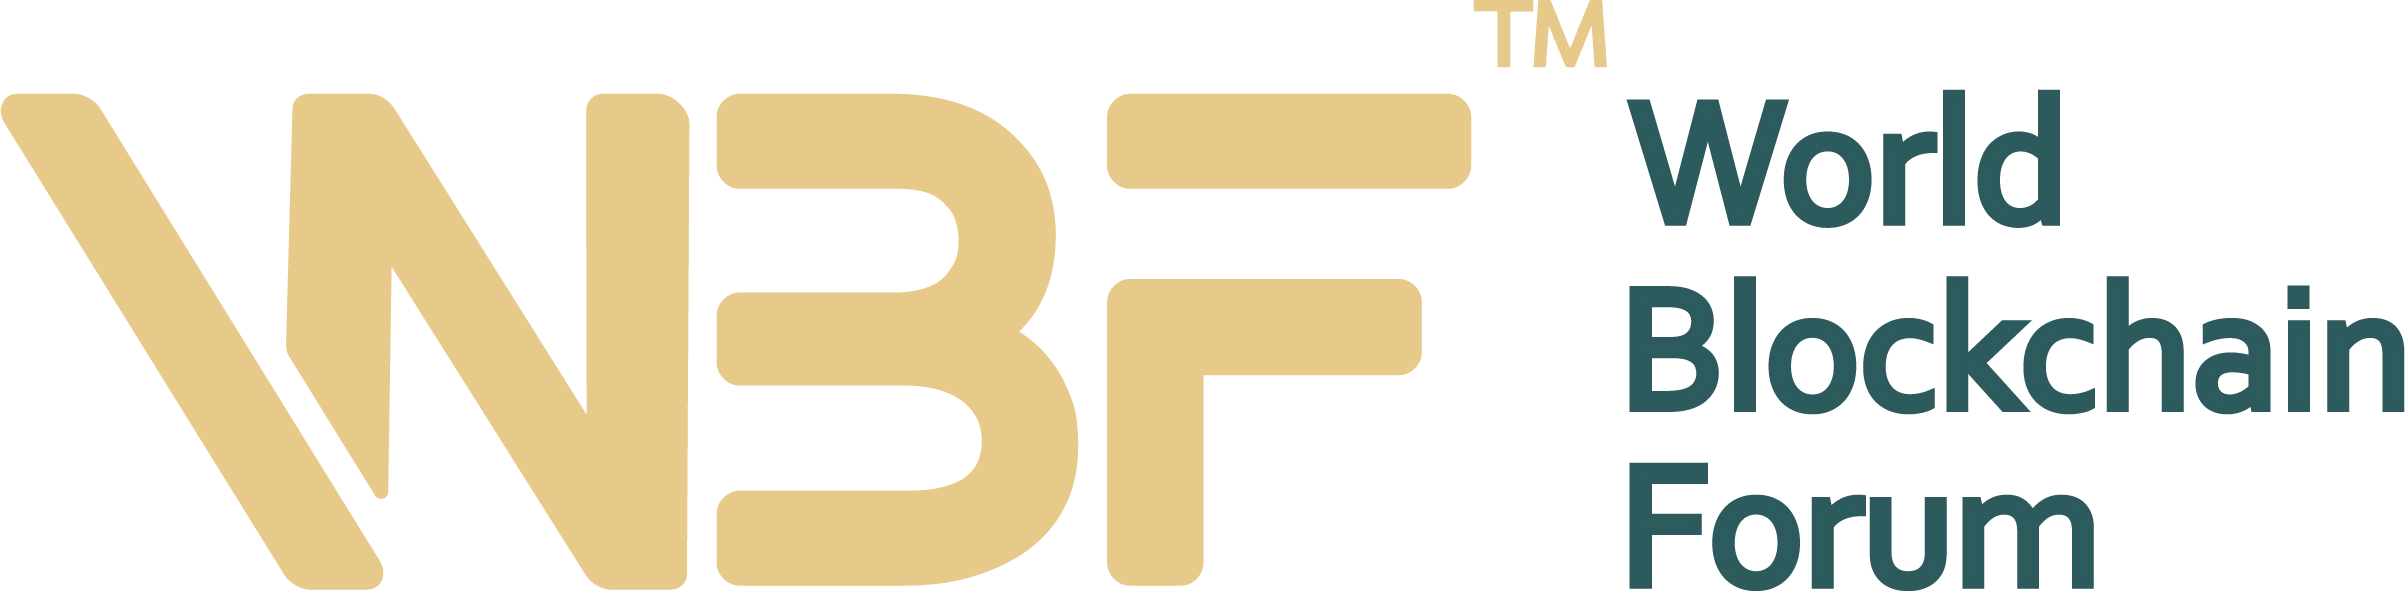 WBF “New York 2019 & World Blockchain Awards” - Accelerating Blockchain Innovation and Beyond